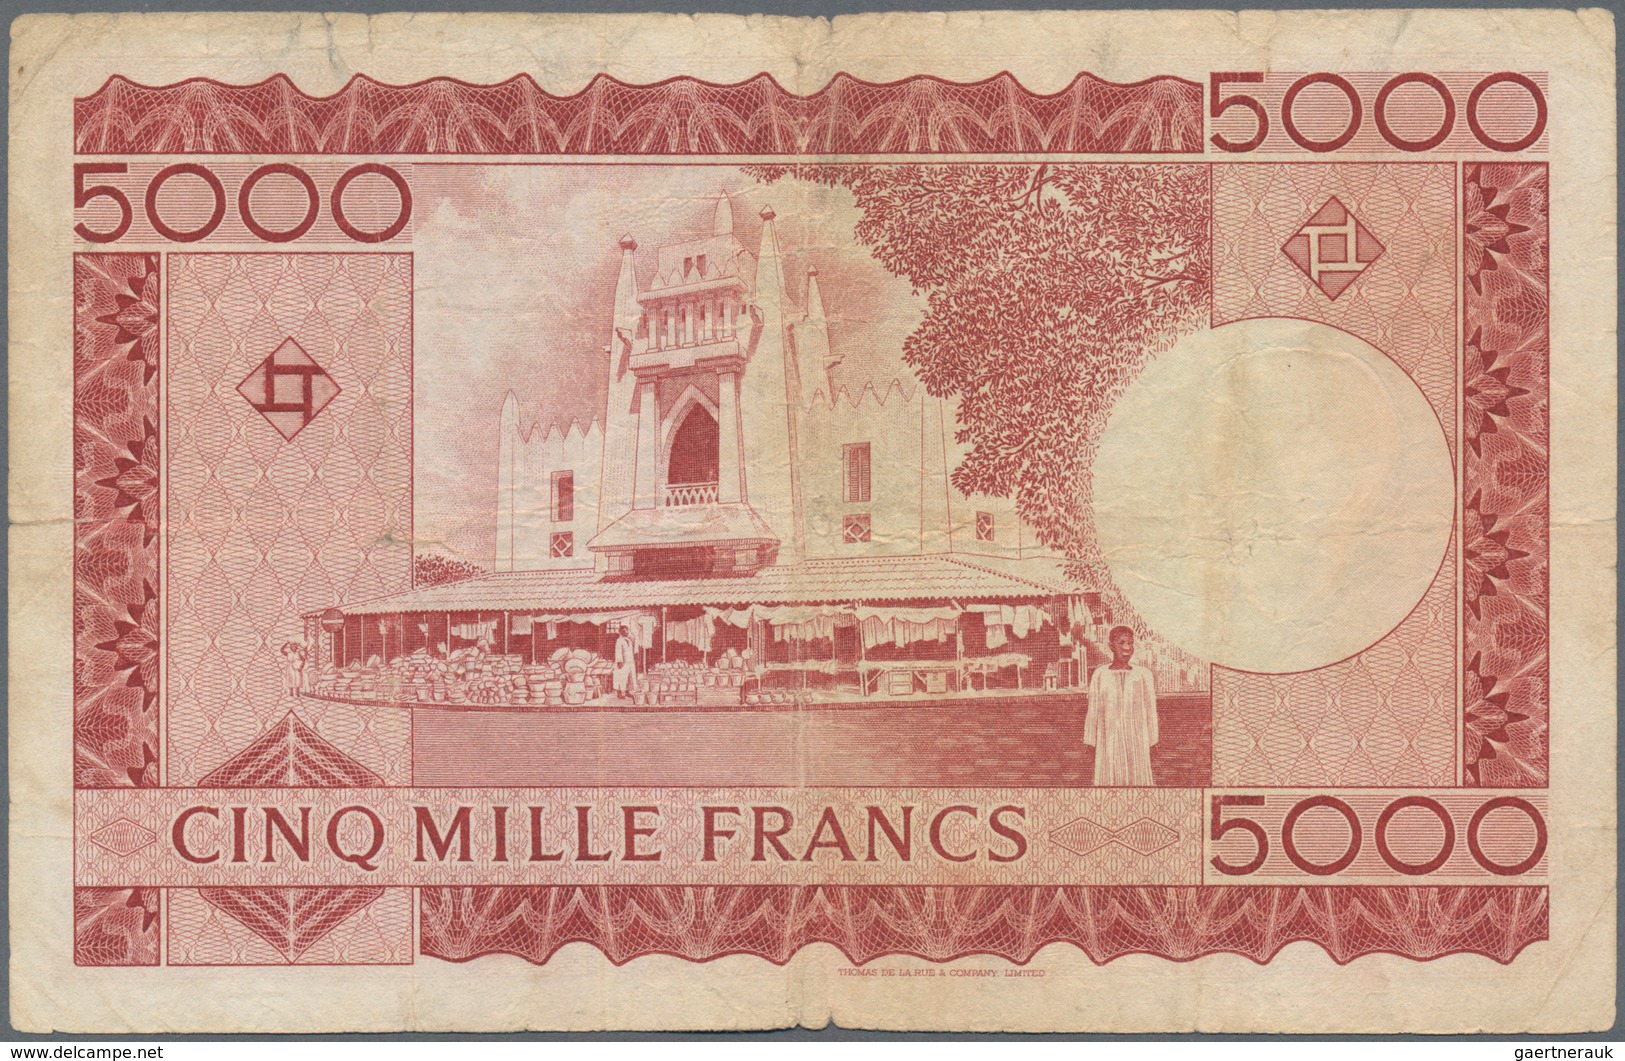 Mali: Very nice set with 5 banknotes Banque de la République du Mali with 100 and 5000 Francs first